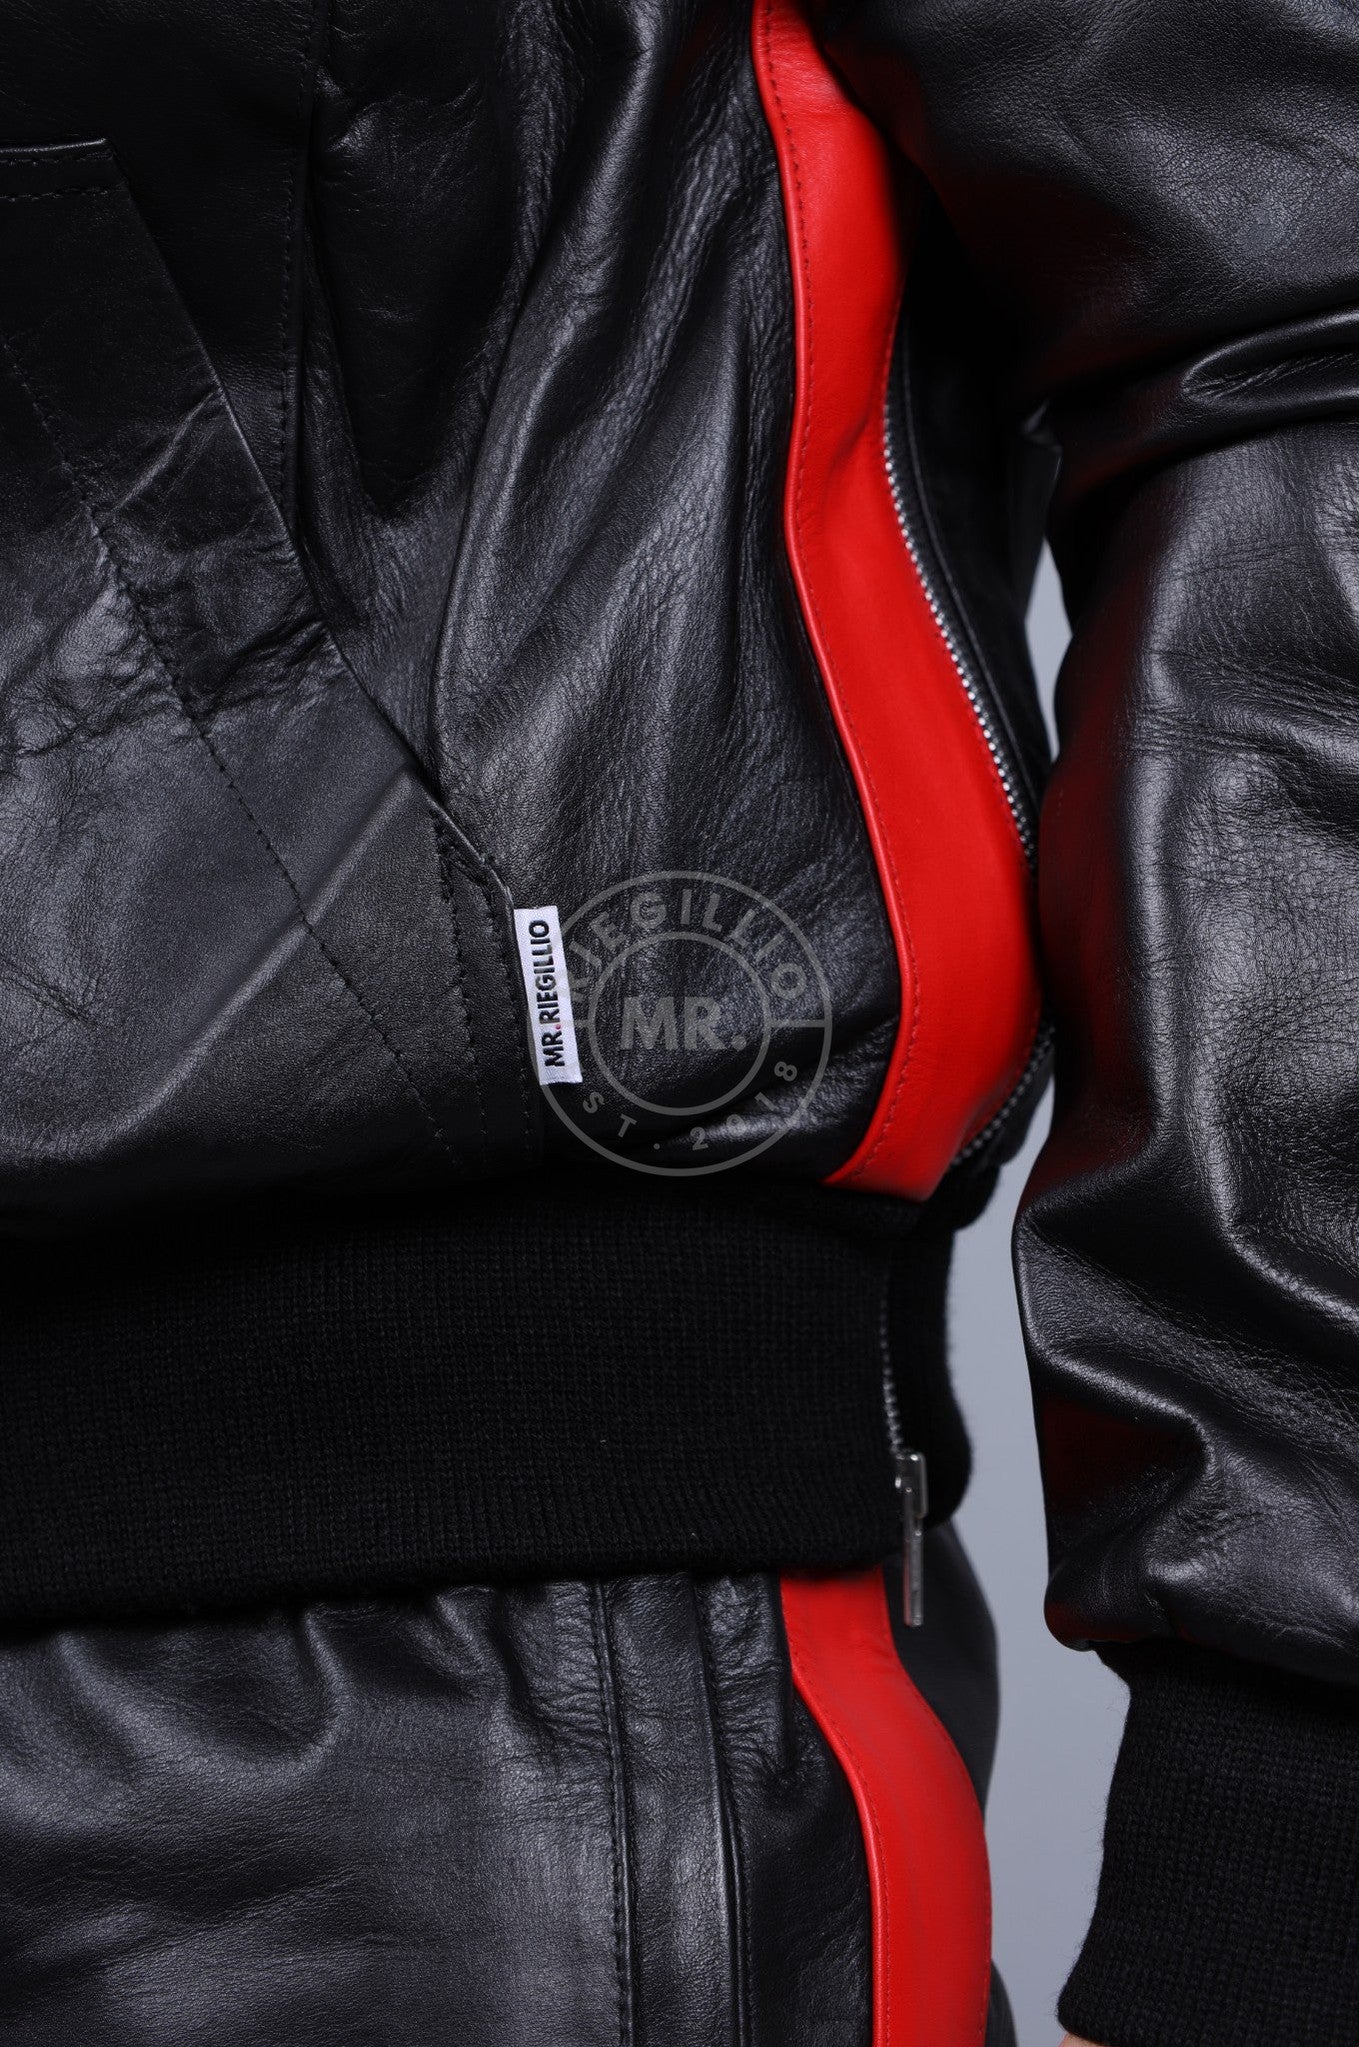 Black Leather Sports Hoodie - Red Stripe at MR. Riegillio